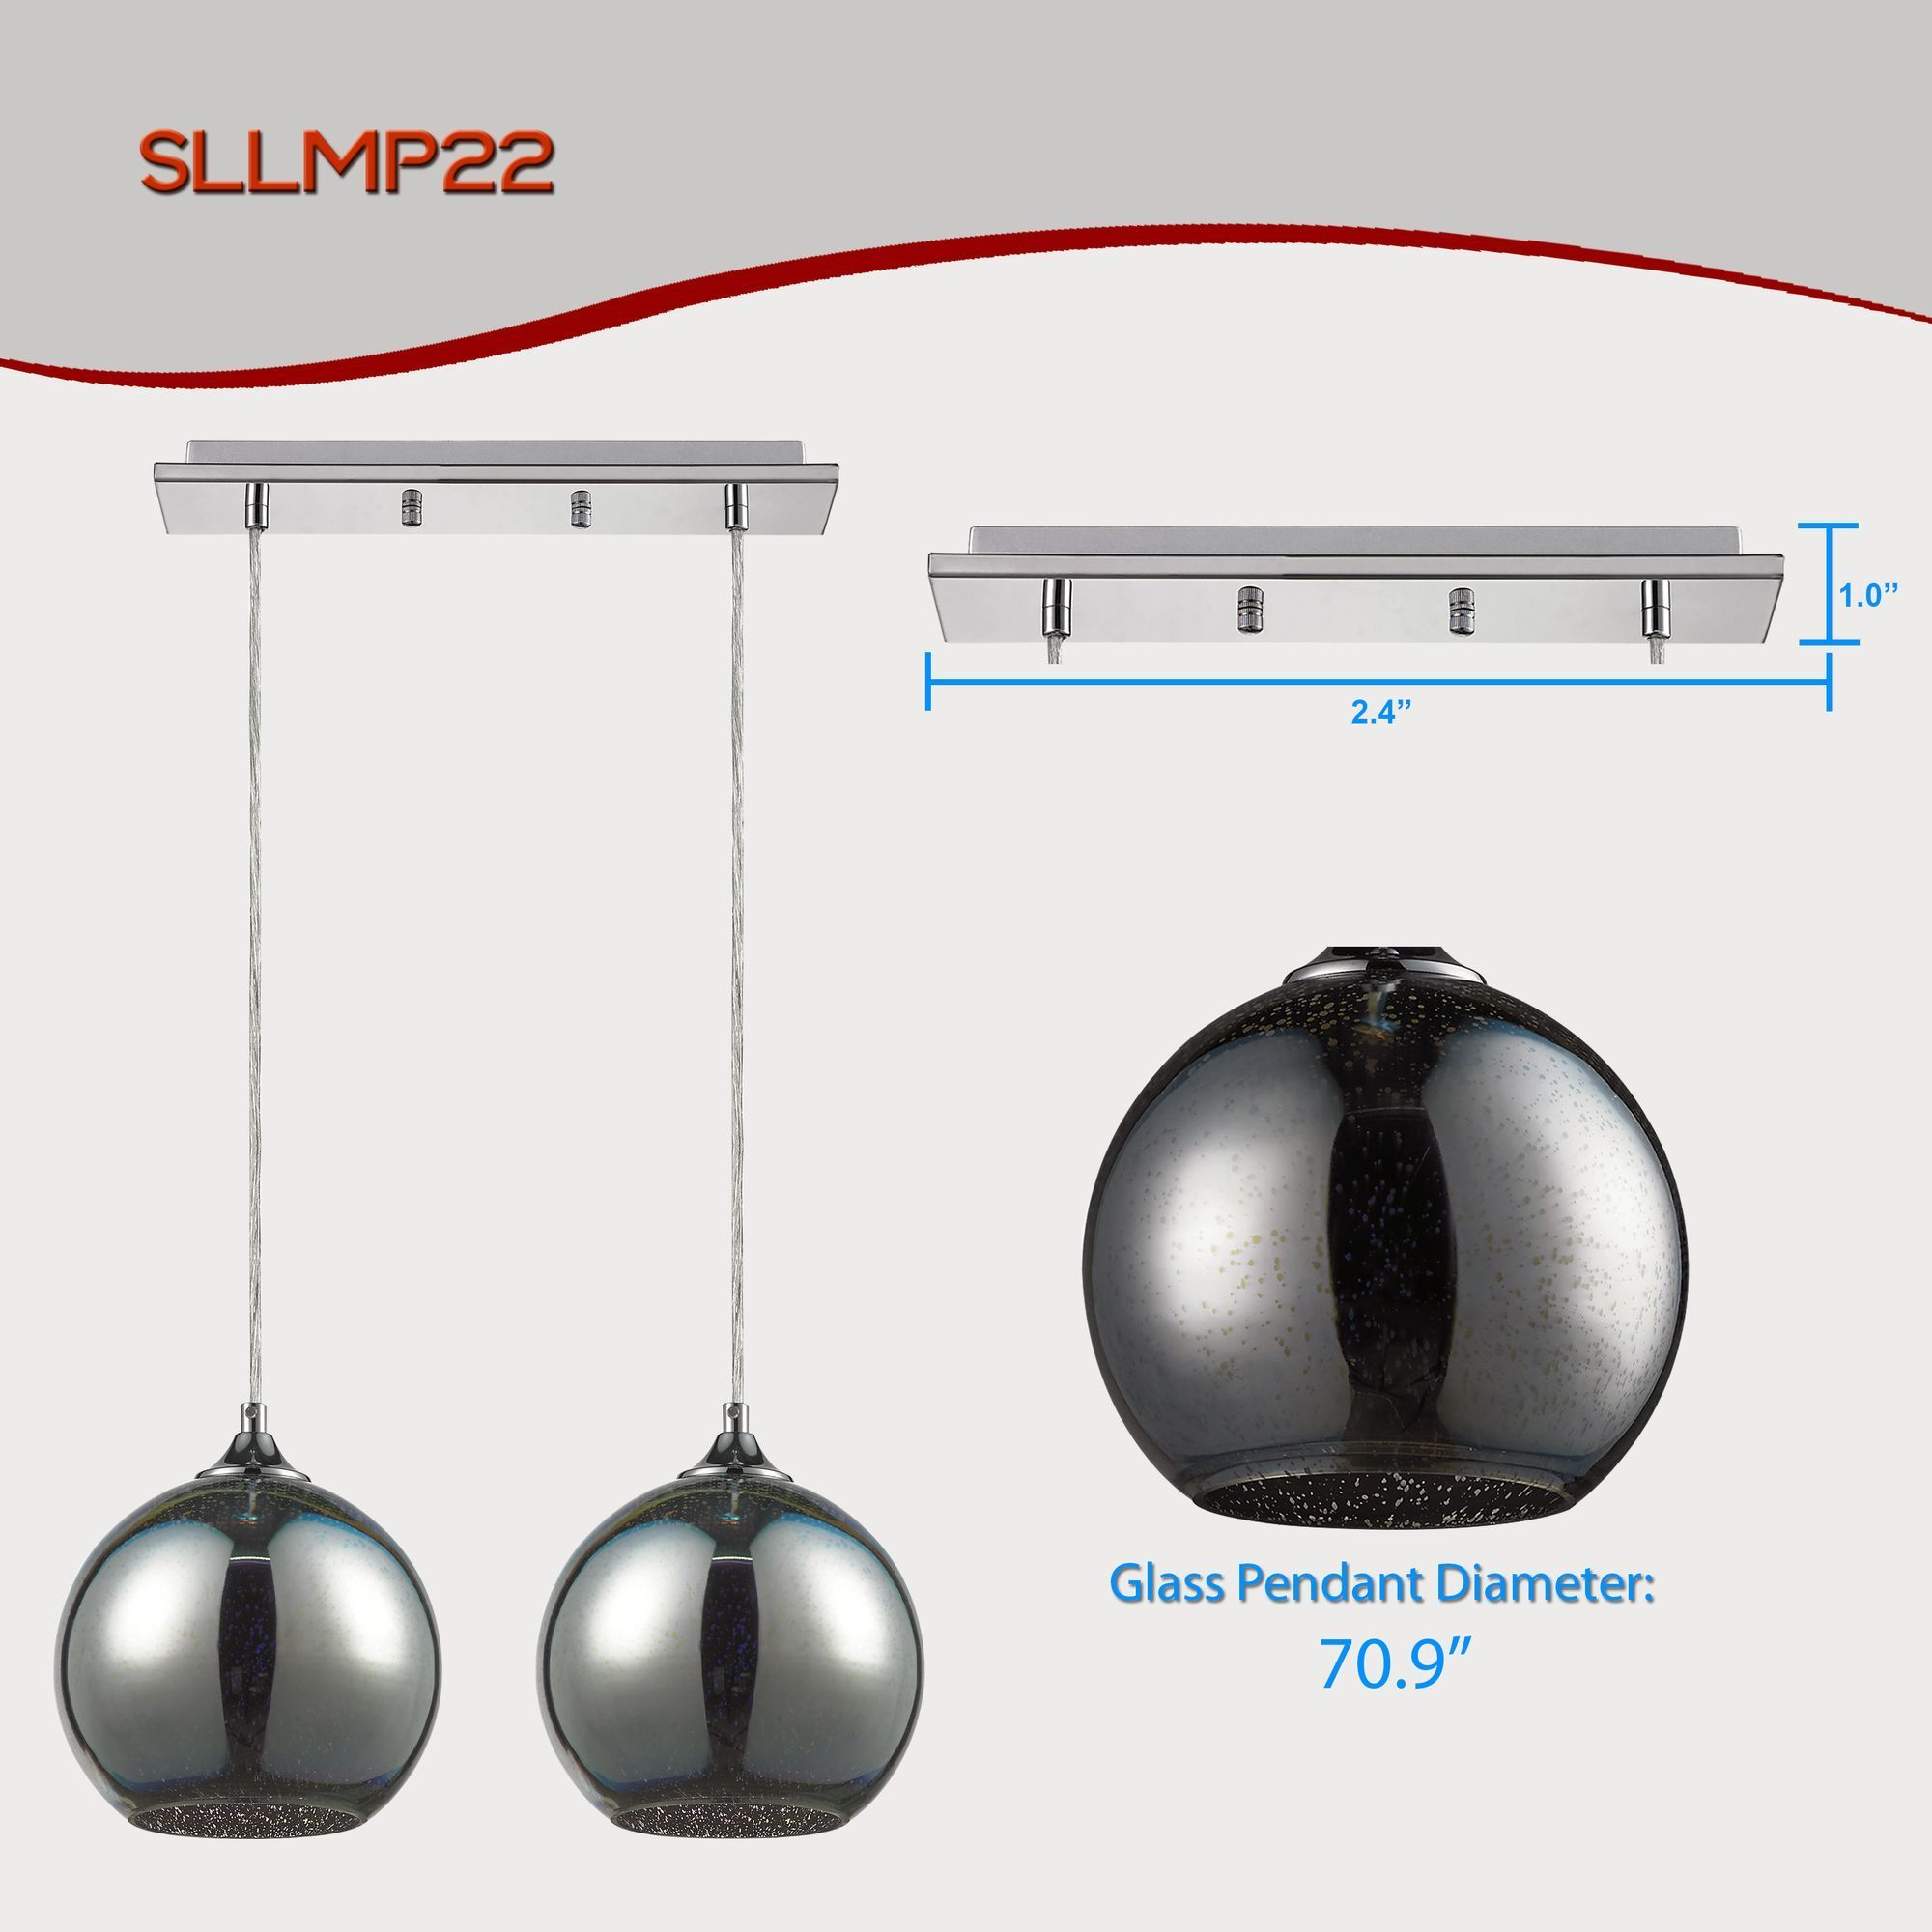 SereneLife Dual Circular Sphere Home Ceiling Lighting Fixture (SLLMP22)